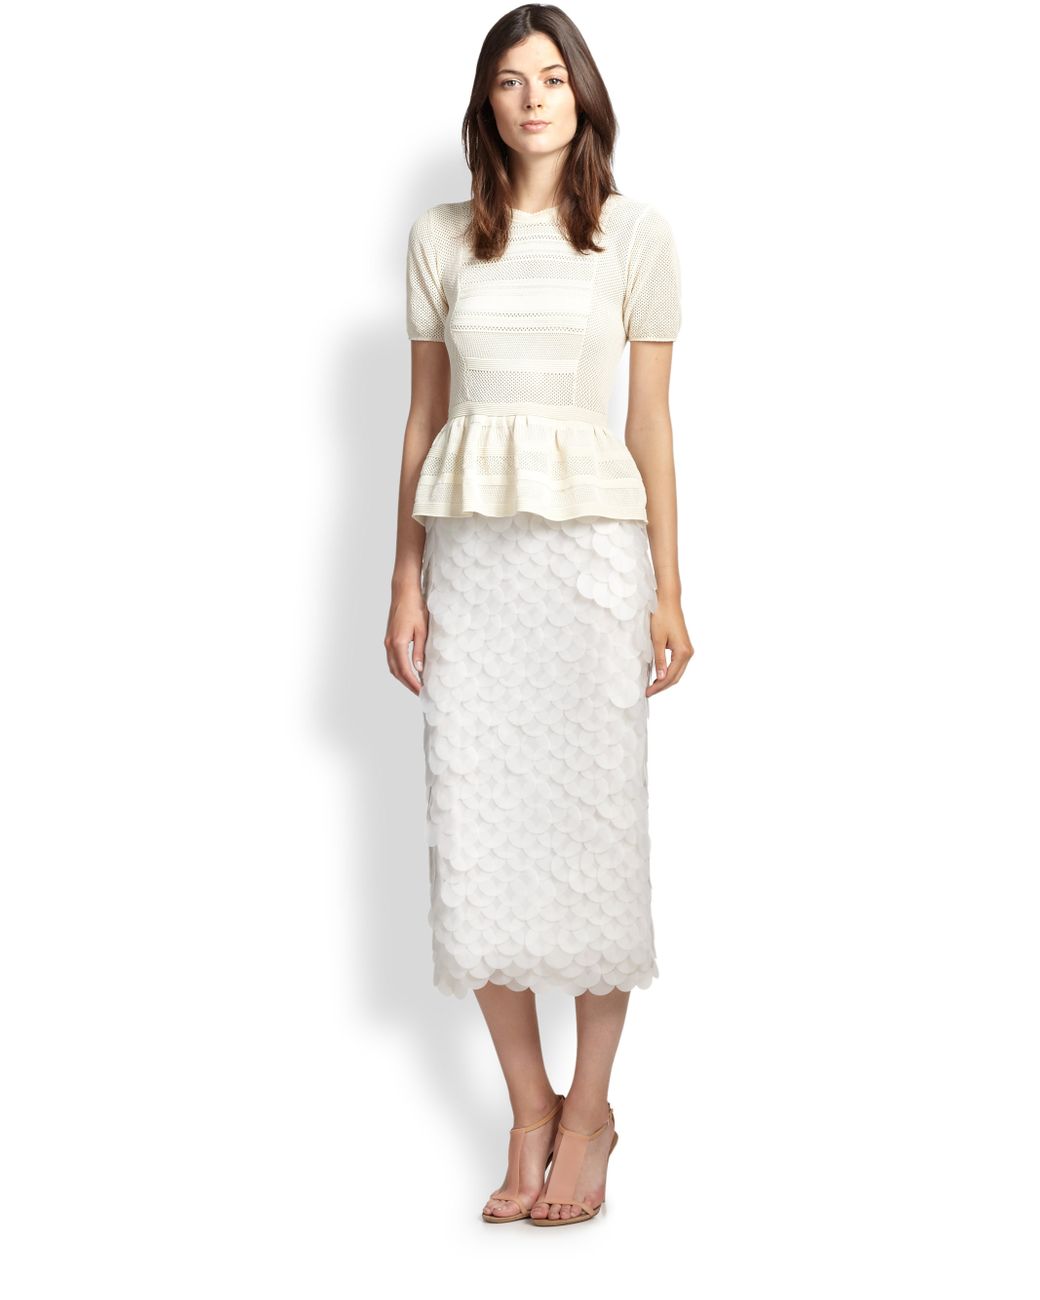 Burberry Prorsum Sequin Scallop Pencil Skirt in White | Lyst